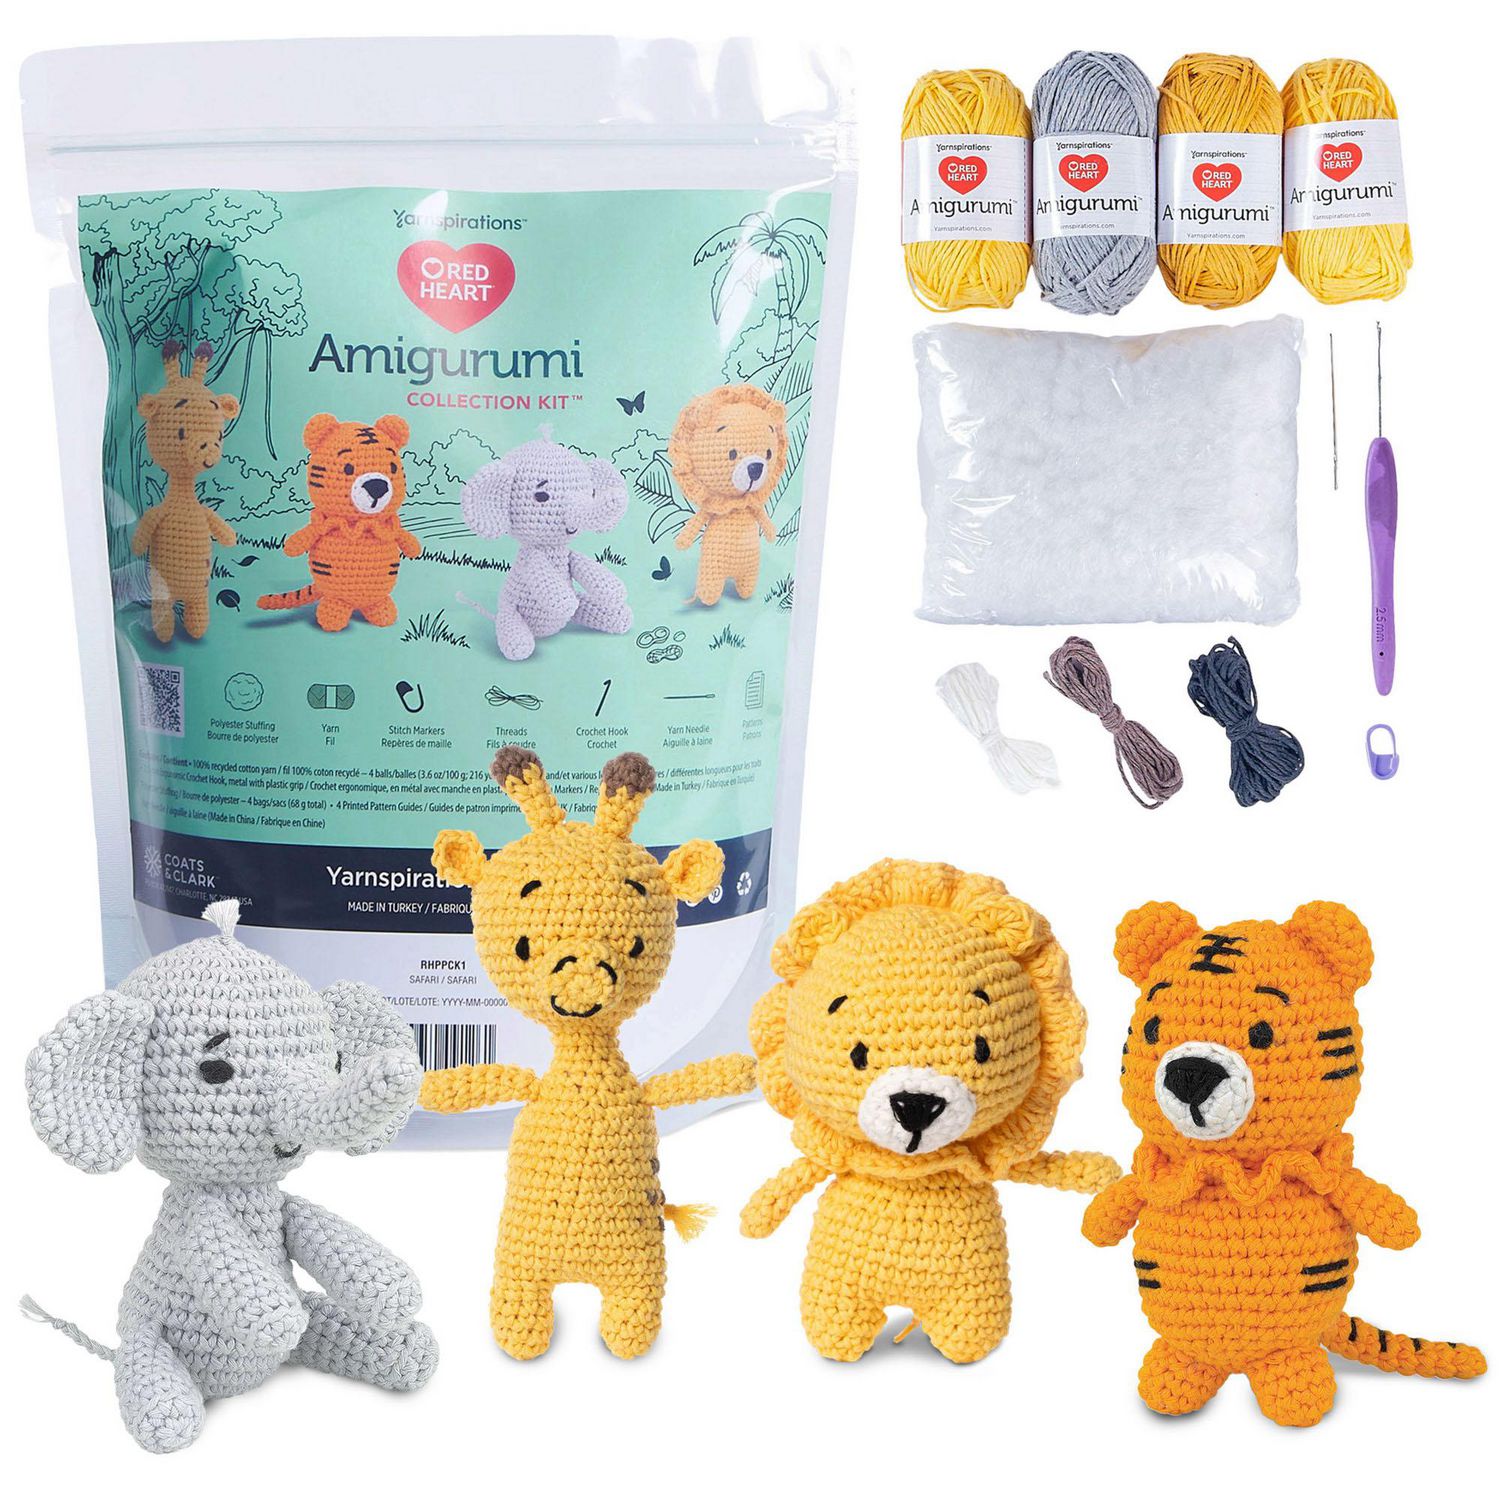 Lion Plastic Bag Holder, Crochet Jungle Decor, Walmart Bag Holder